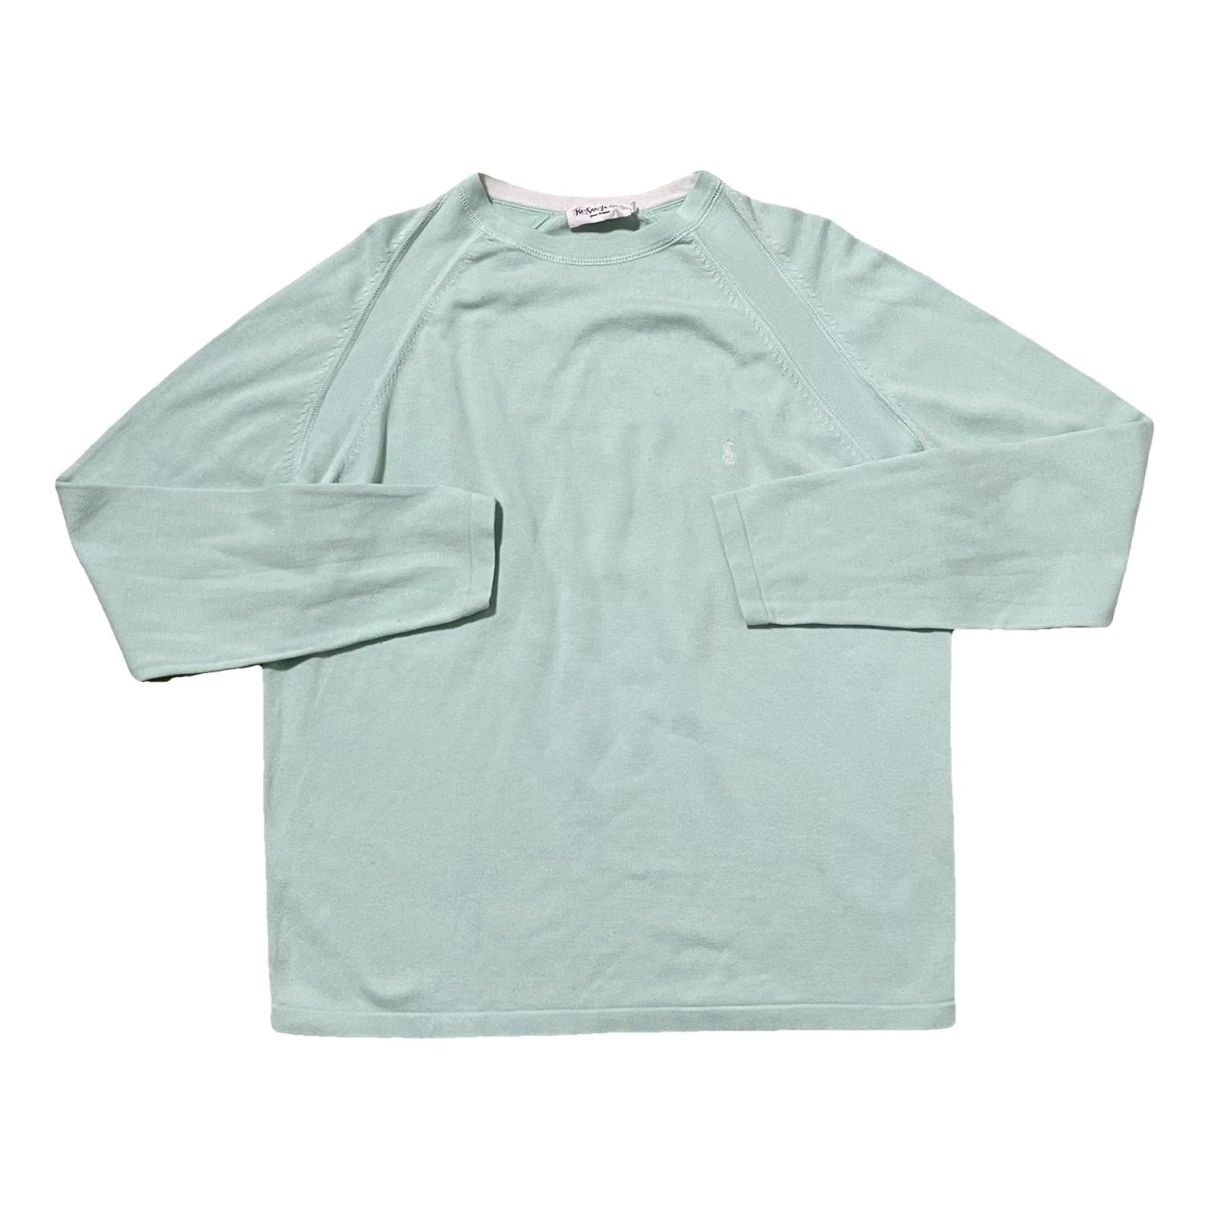 Pre-owned Saint Laurent Sweatshirt In Turquoise